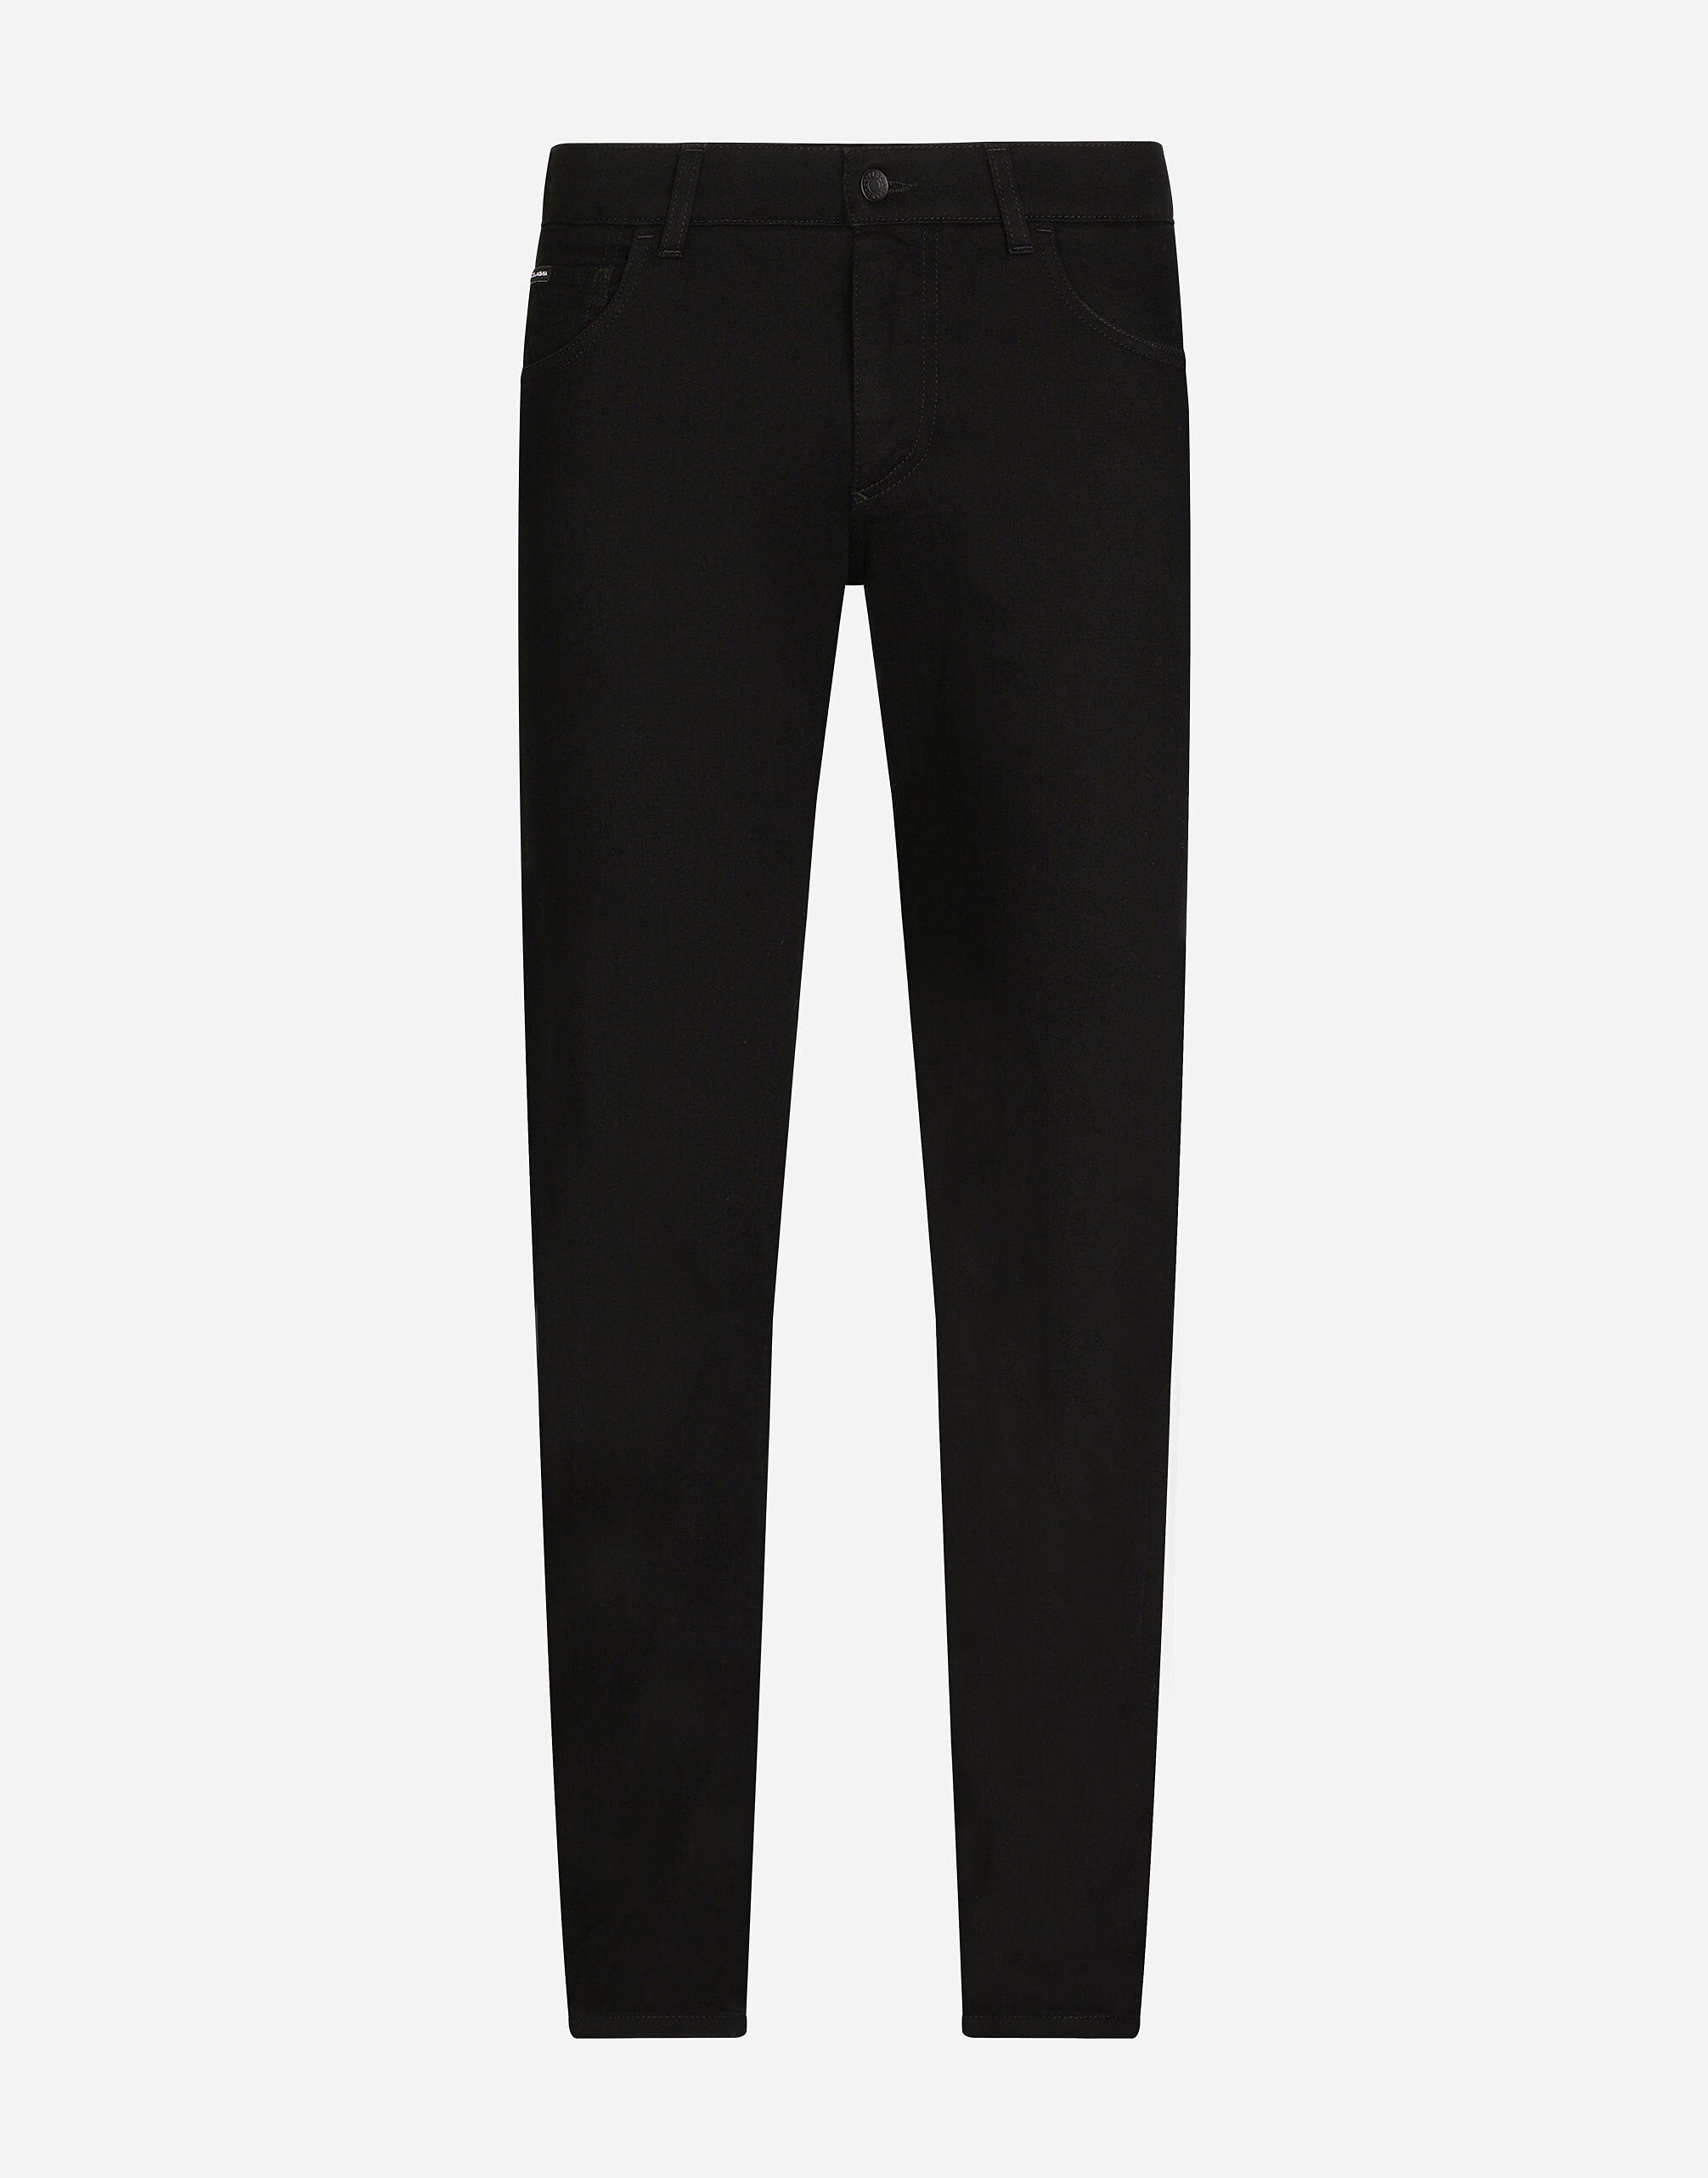 Dolce & Gabbana Black slim-fit stretch jeans Black GY07CDG8KN4